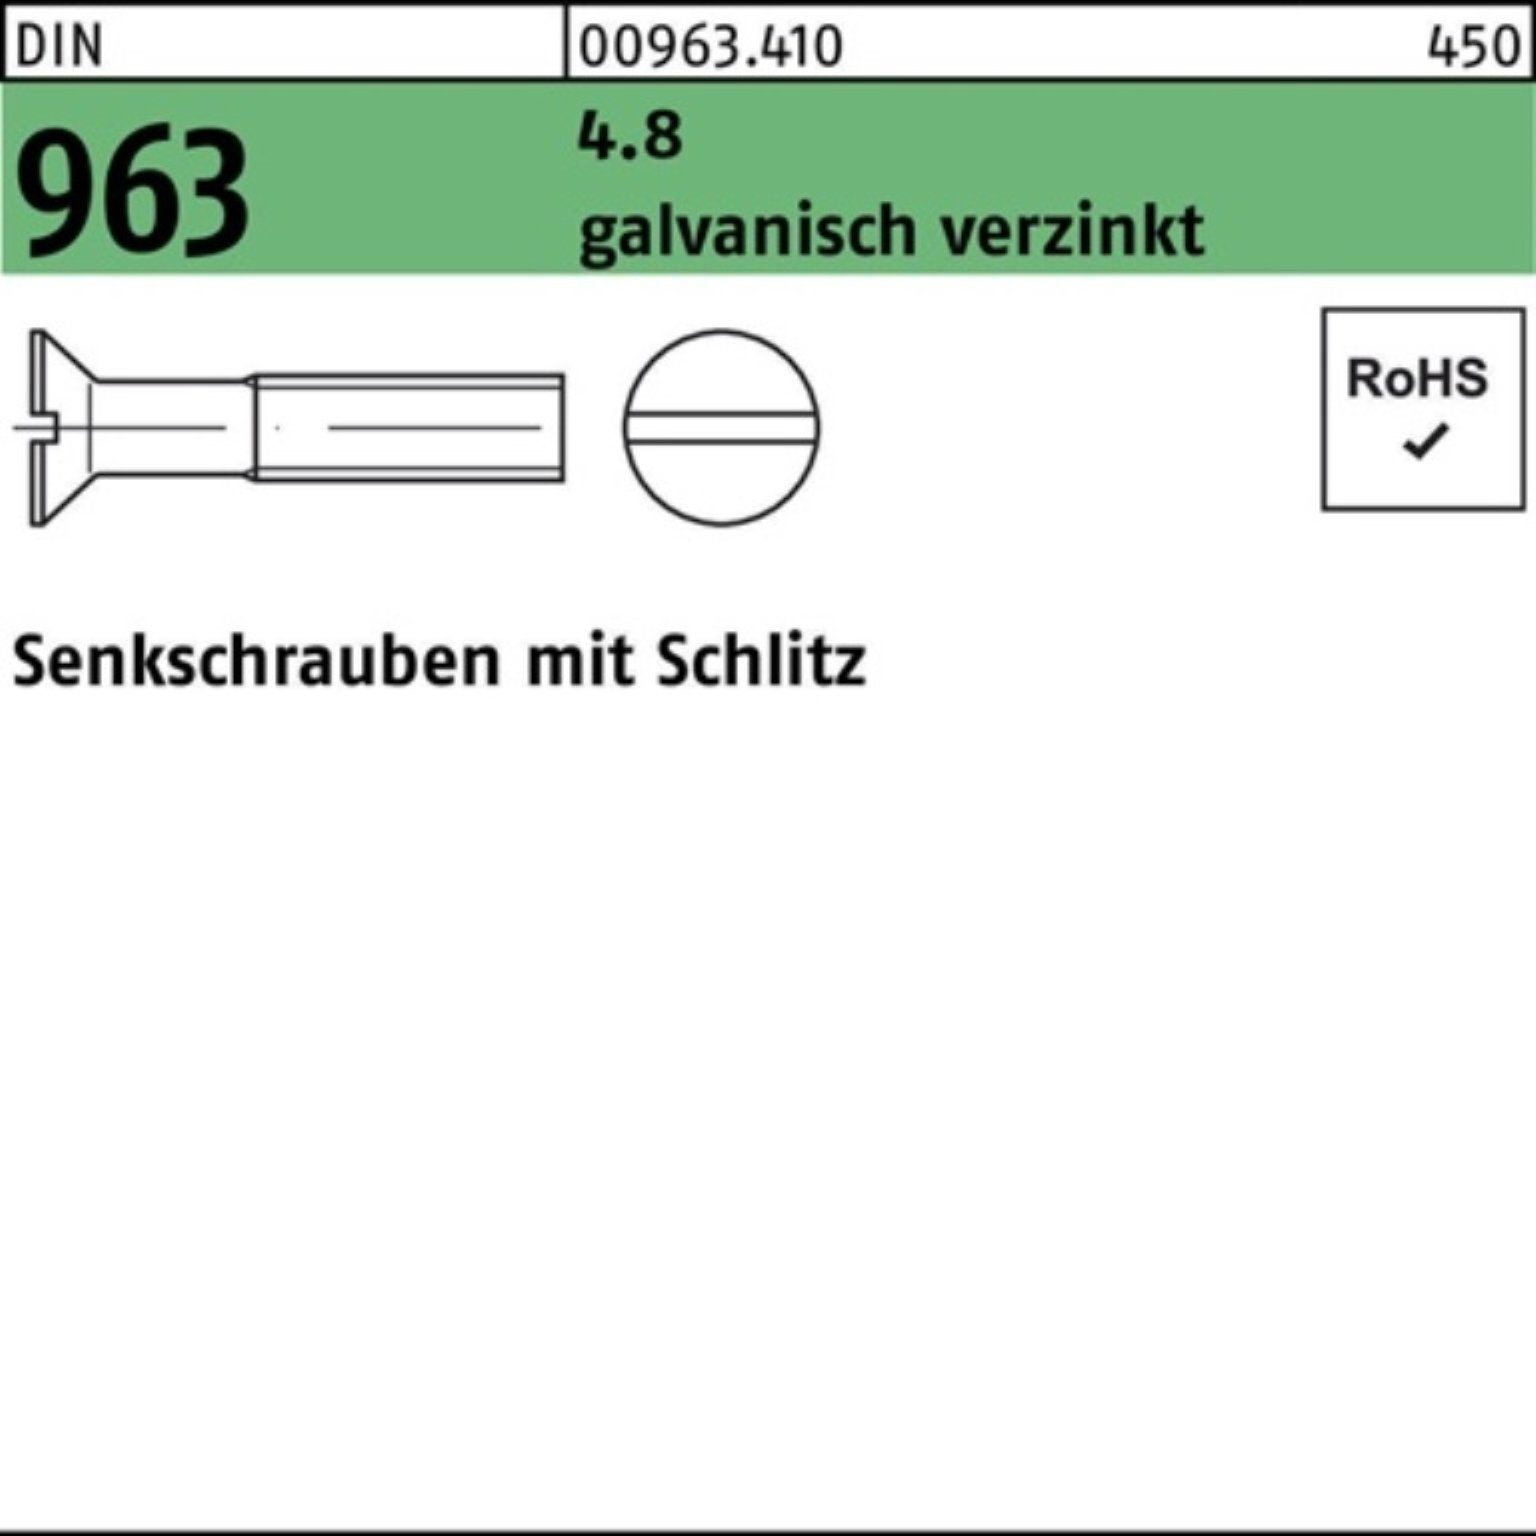 200 DIN Senkschraube 4.8 963 galv.verz. Senkschraube Schlitz 200er 22 Pack M6x Reyher Stü